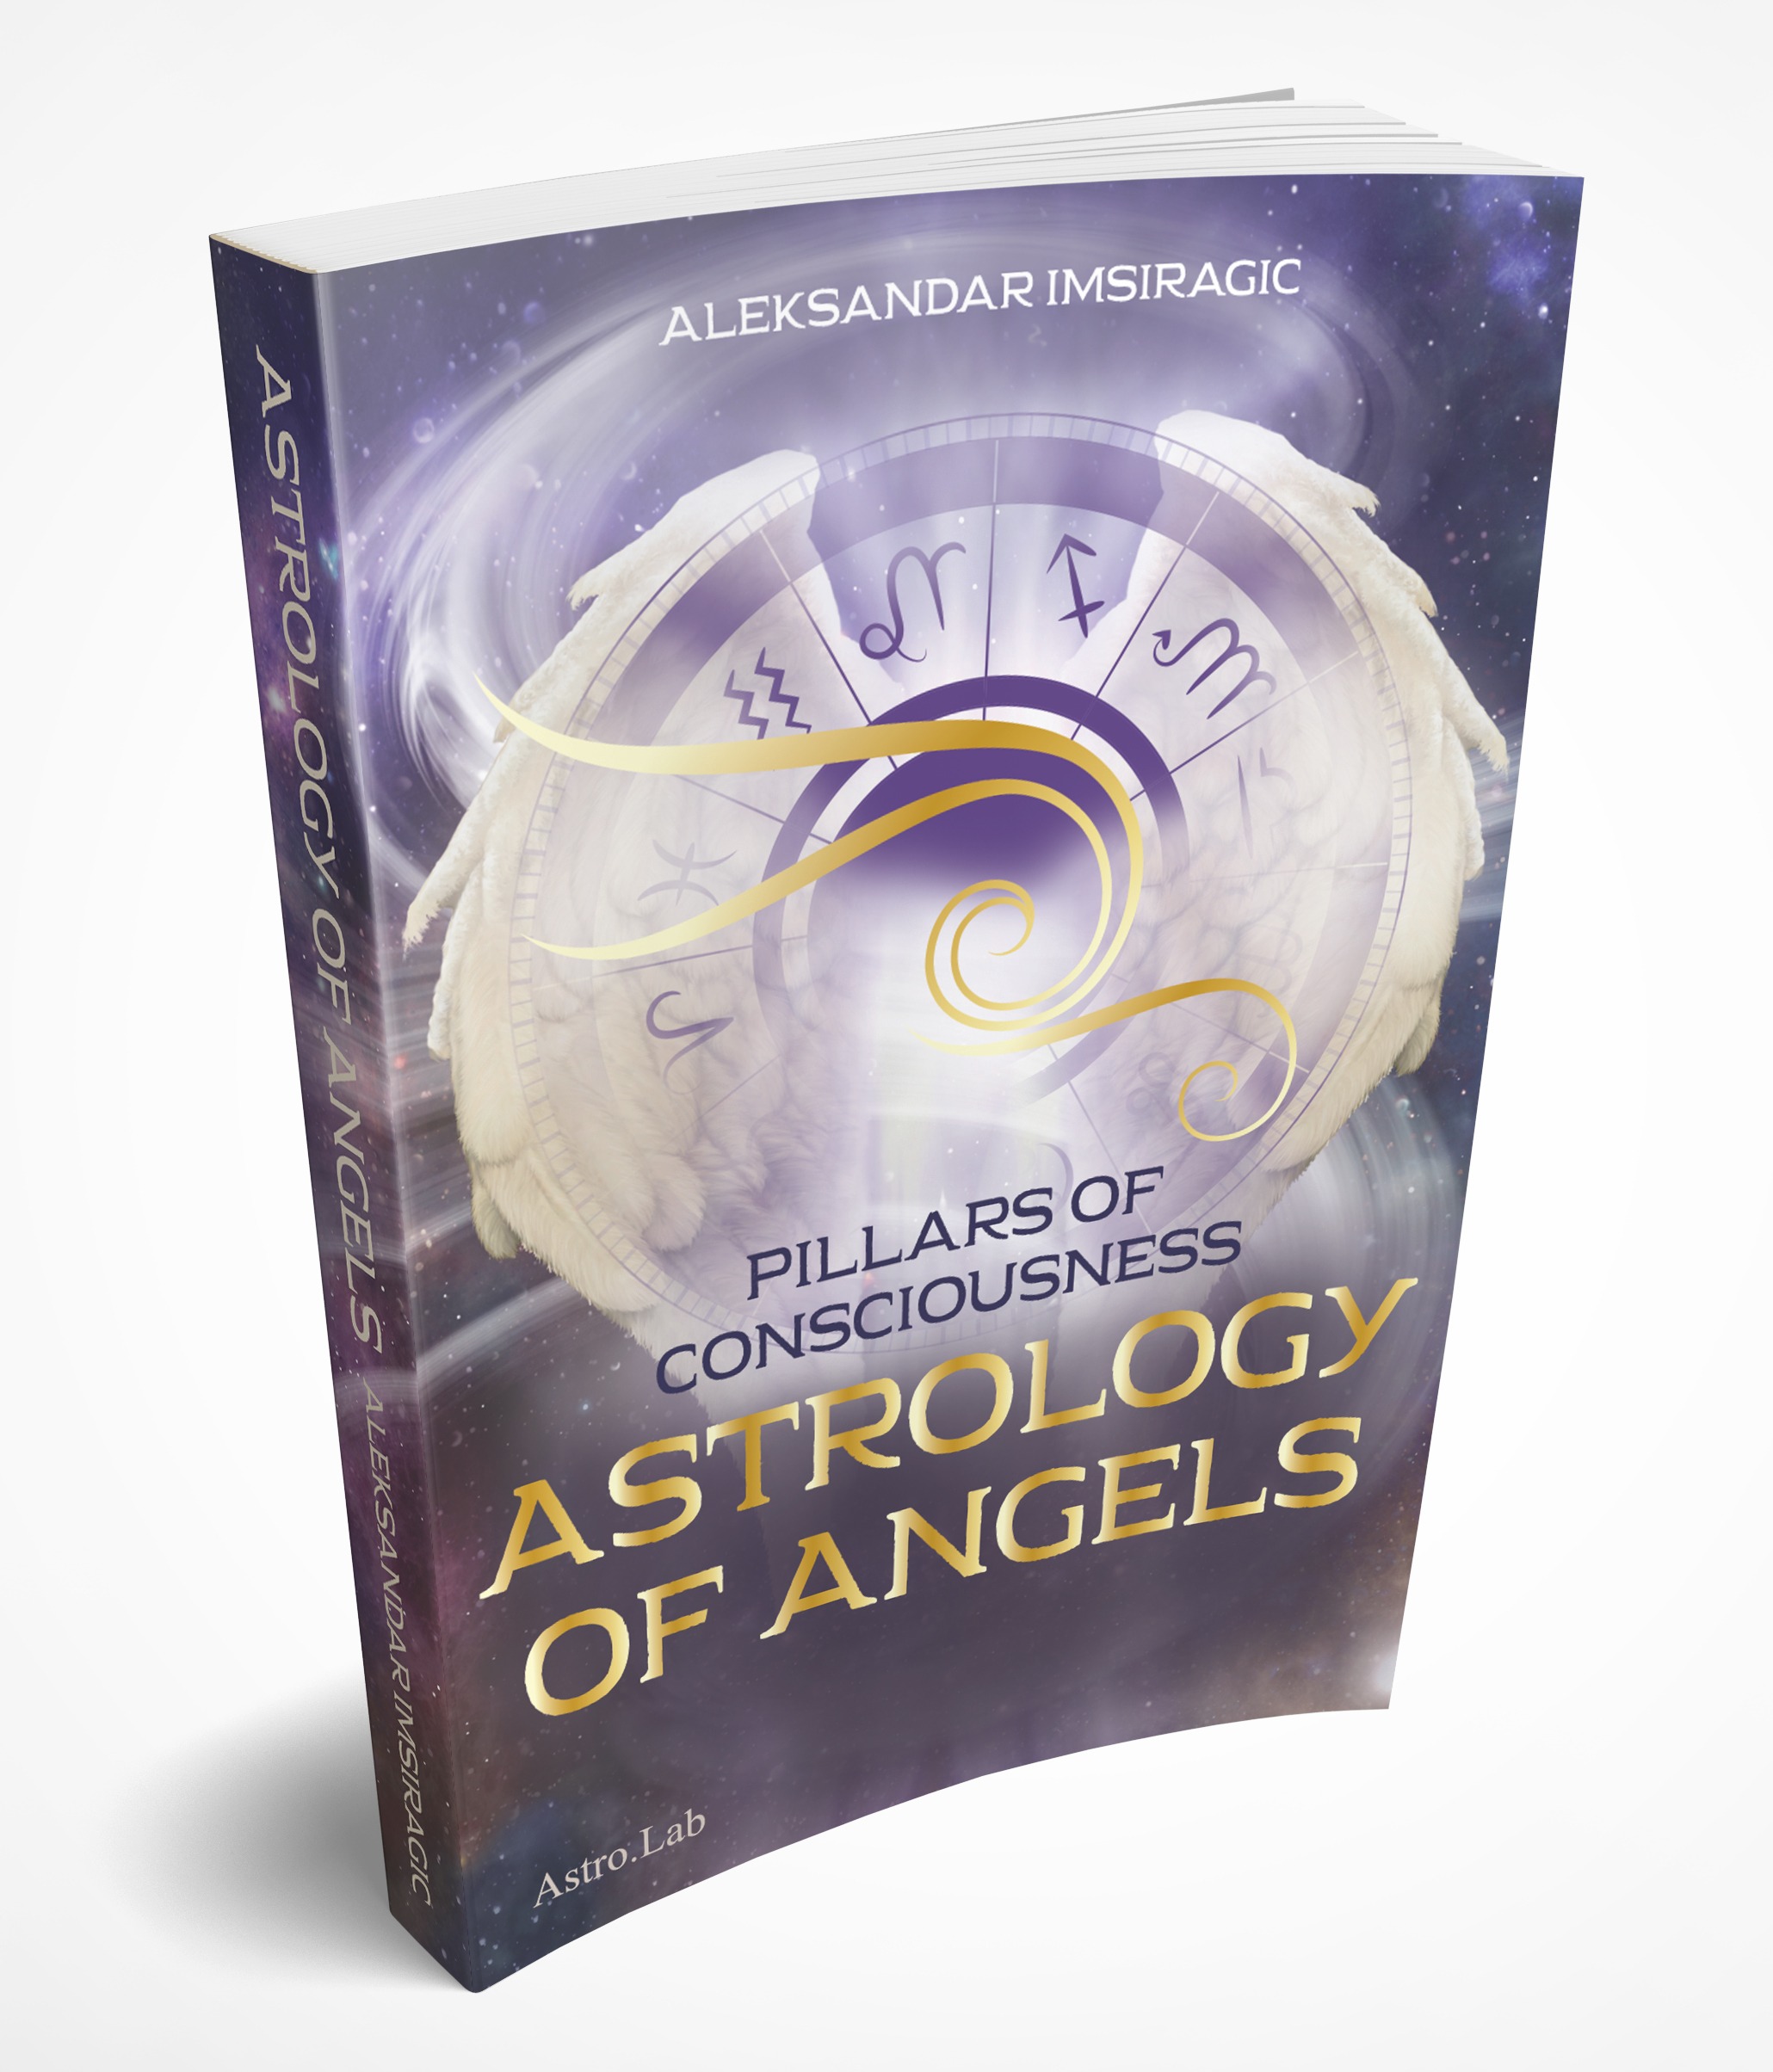 NEW BOOK by Aleksandar Imsiragic: ASTROLOGY OF ANGELS